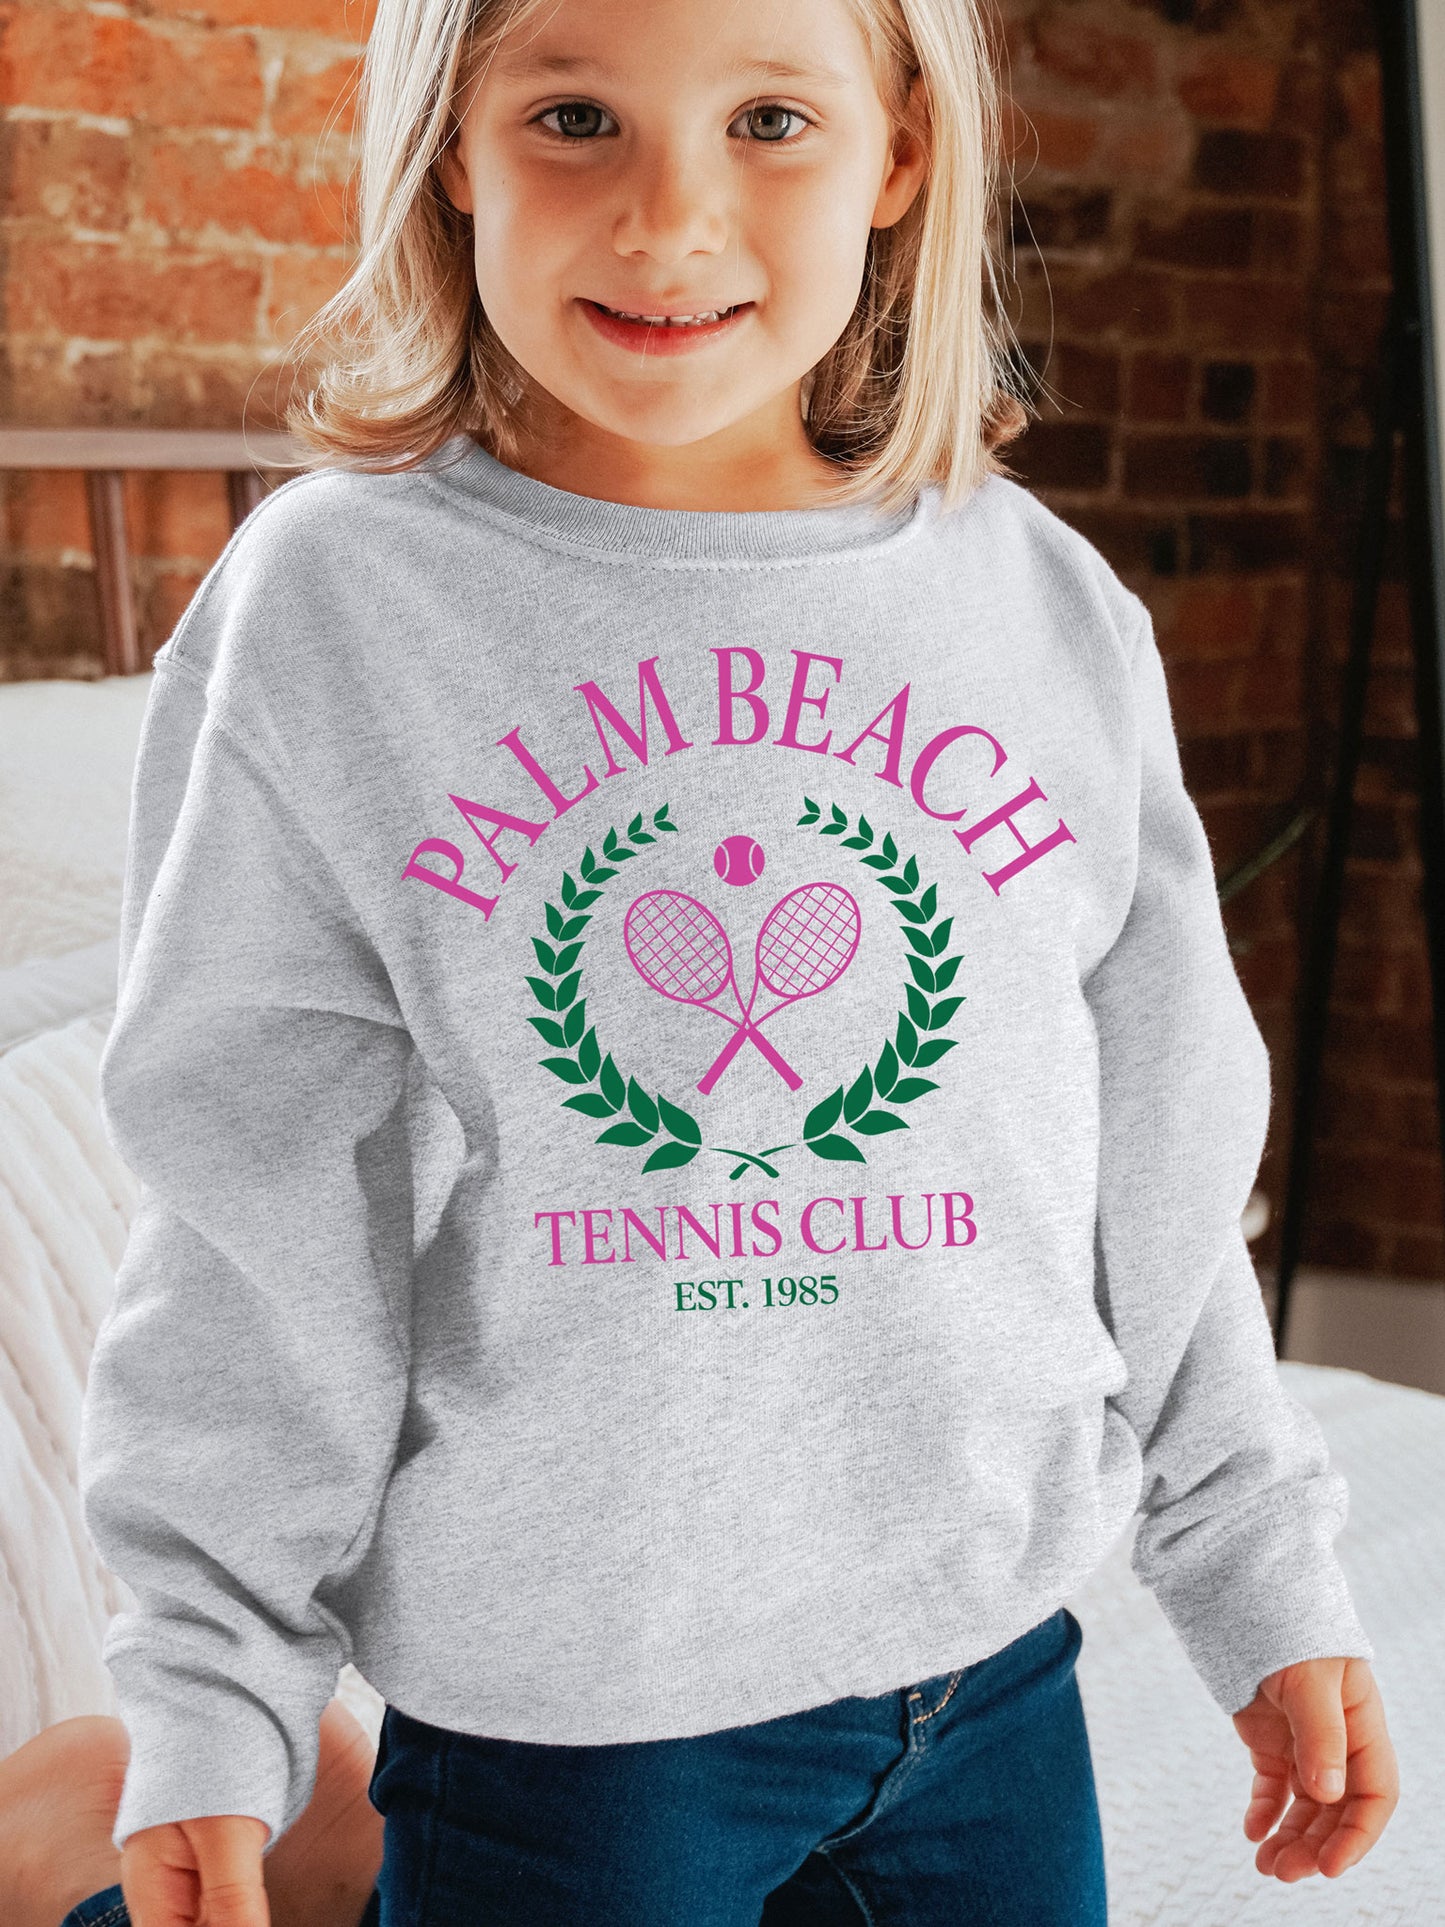 Kids Palm Beach Tennis Club Sweatshirt